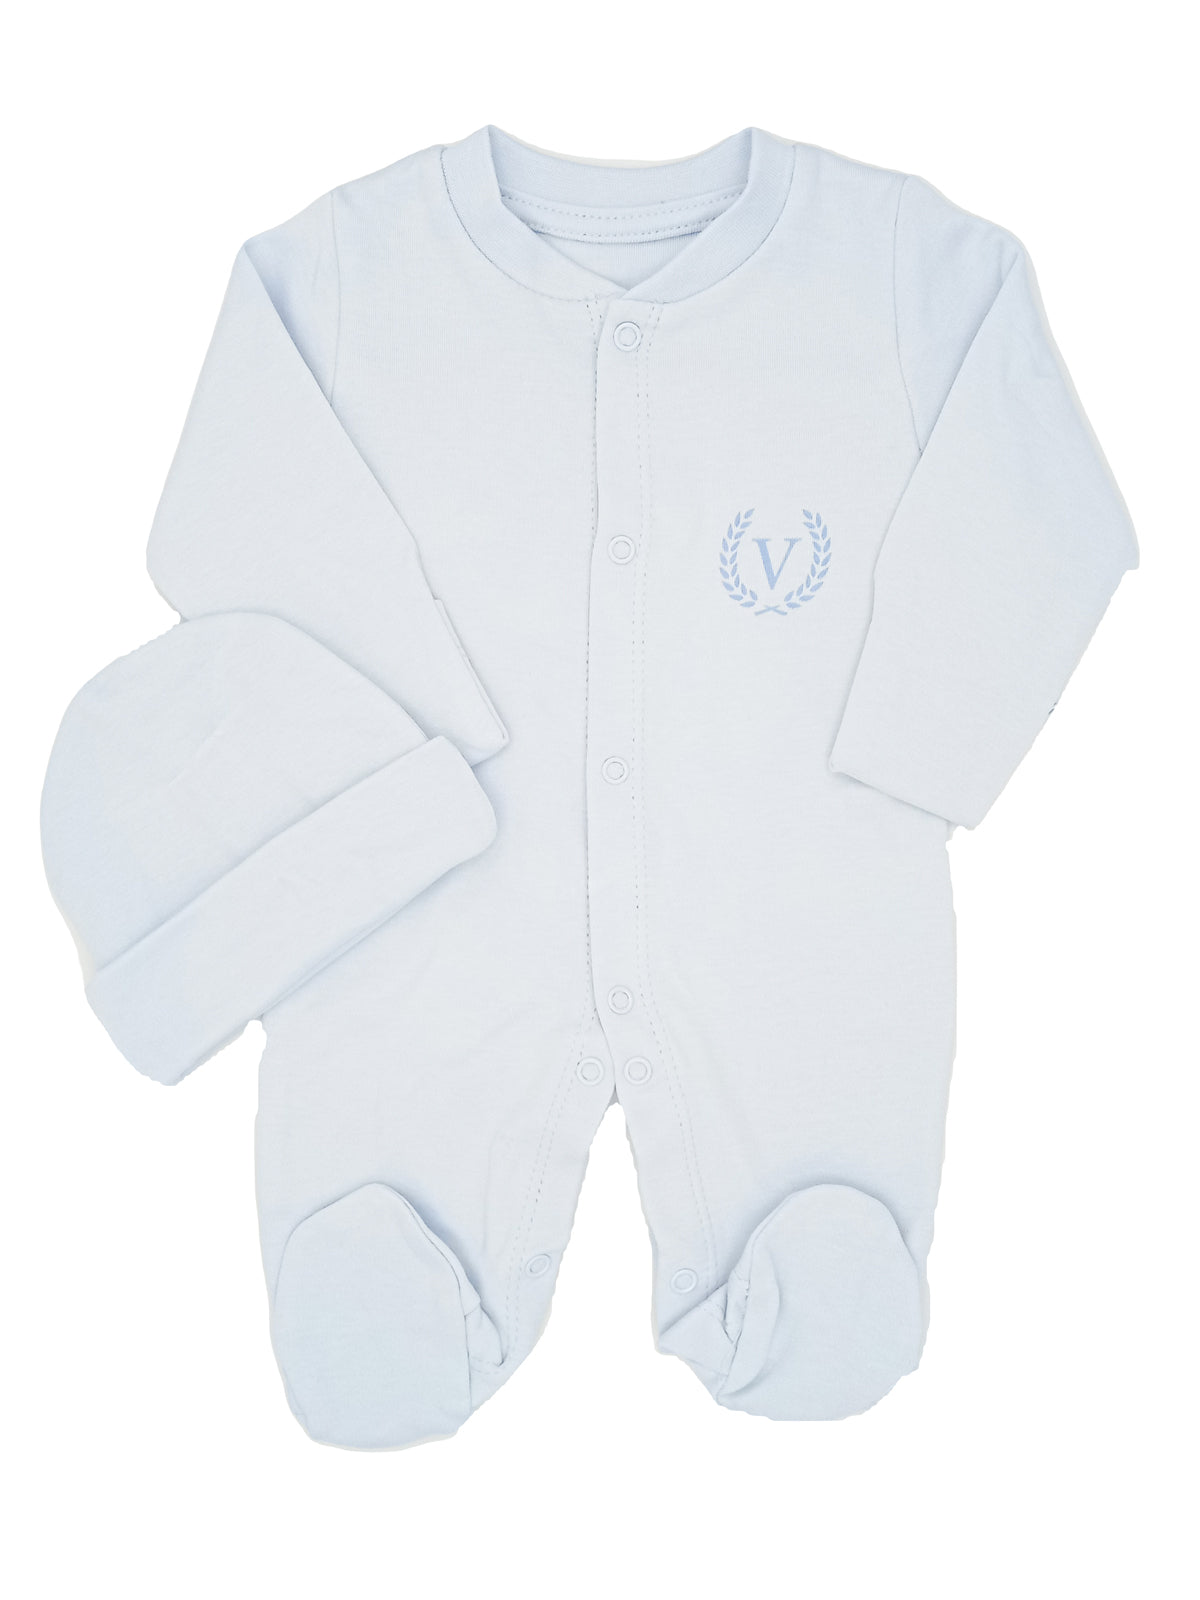 Visara Tiny Baby Sleepsuit & Hat Set - Blue - Sleepsuit / Babygrow - Visara